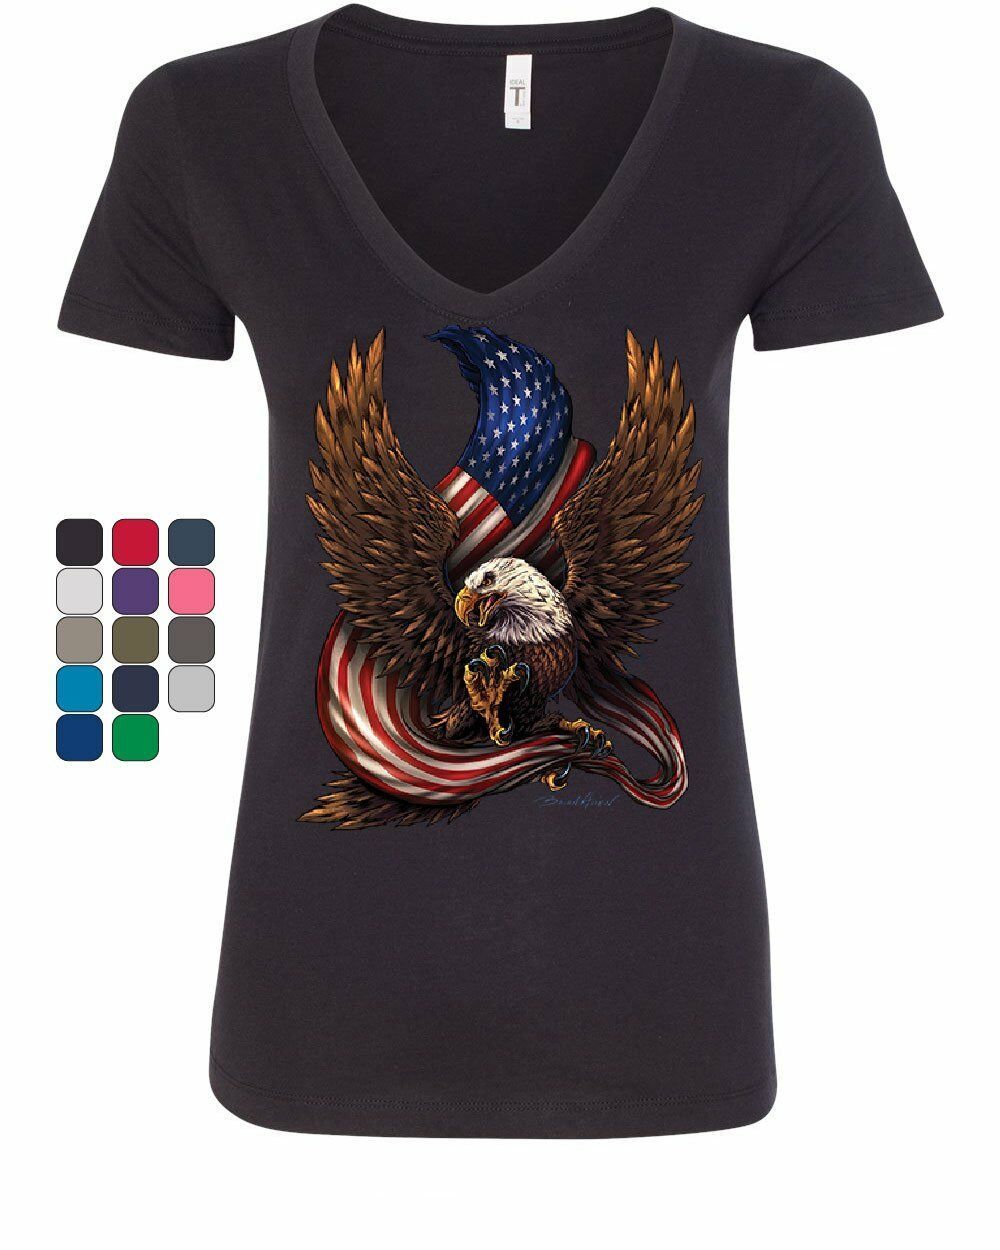 USA Stars and Stripes Women's V-Neck T-Shirt Patriot American Pride Bald Eagle